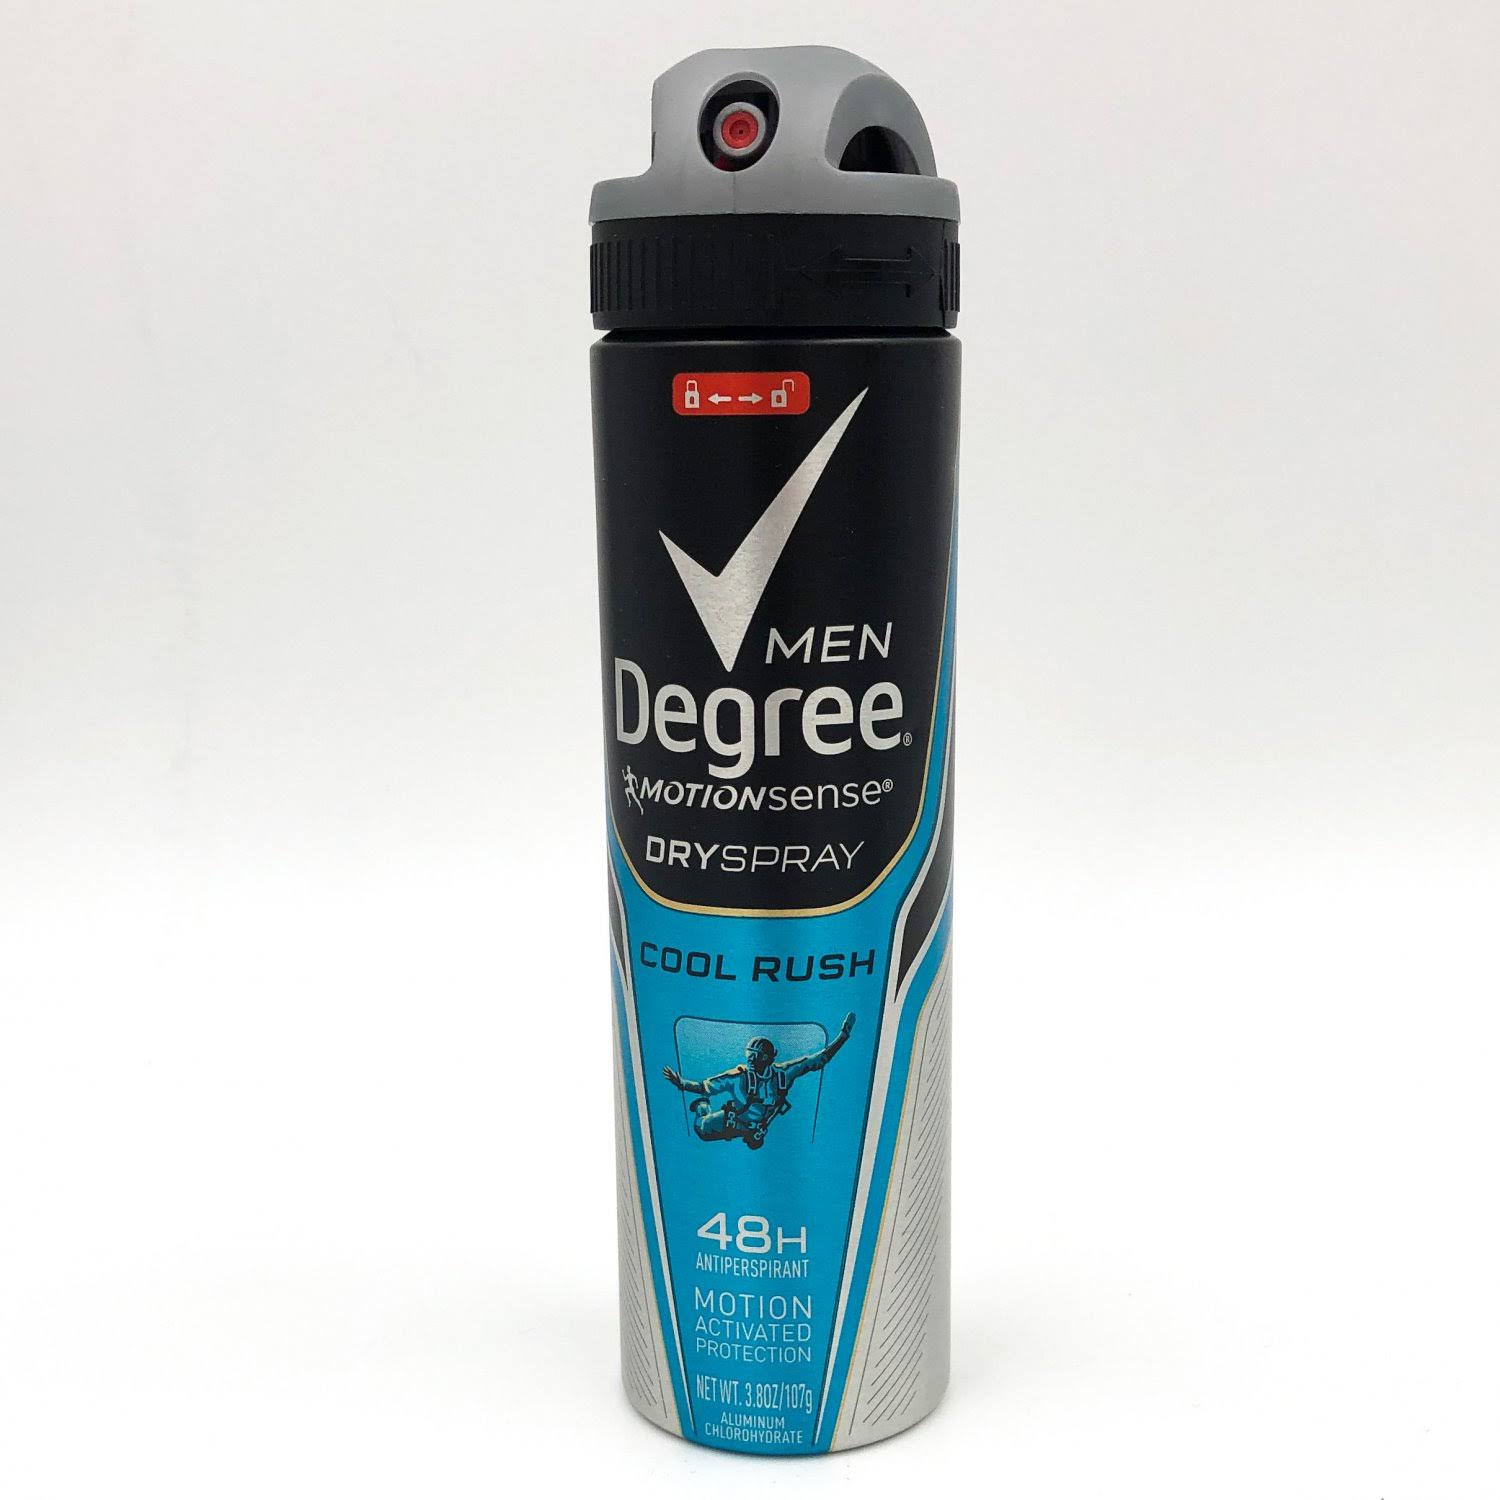 Degree Men Motionsense 48hr Anti Perspirant Dry Spray - Cool Rush, 3.8oz